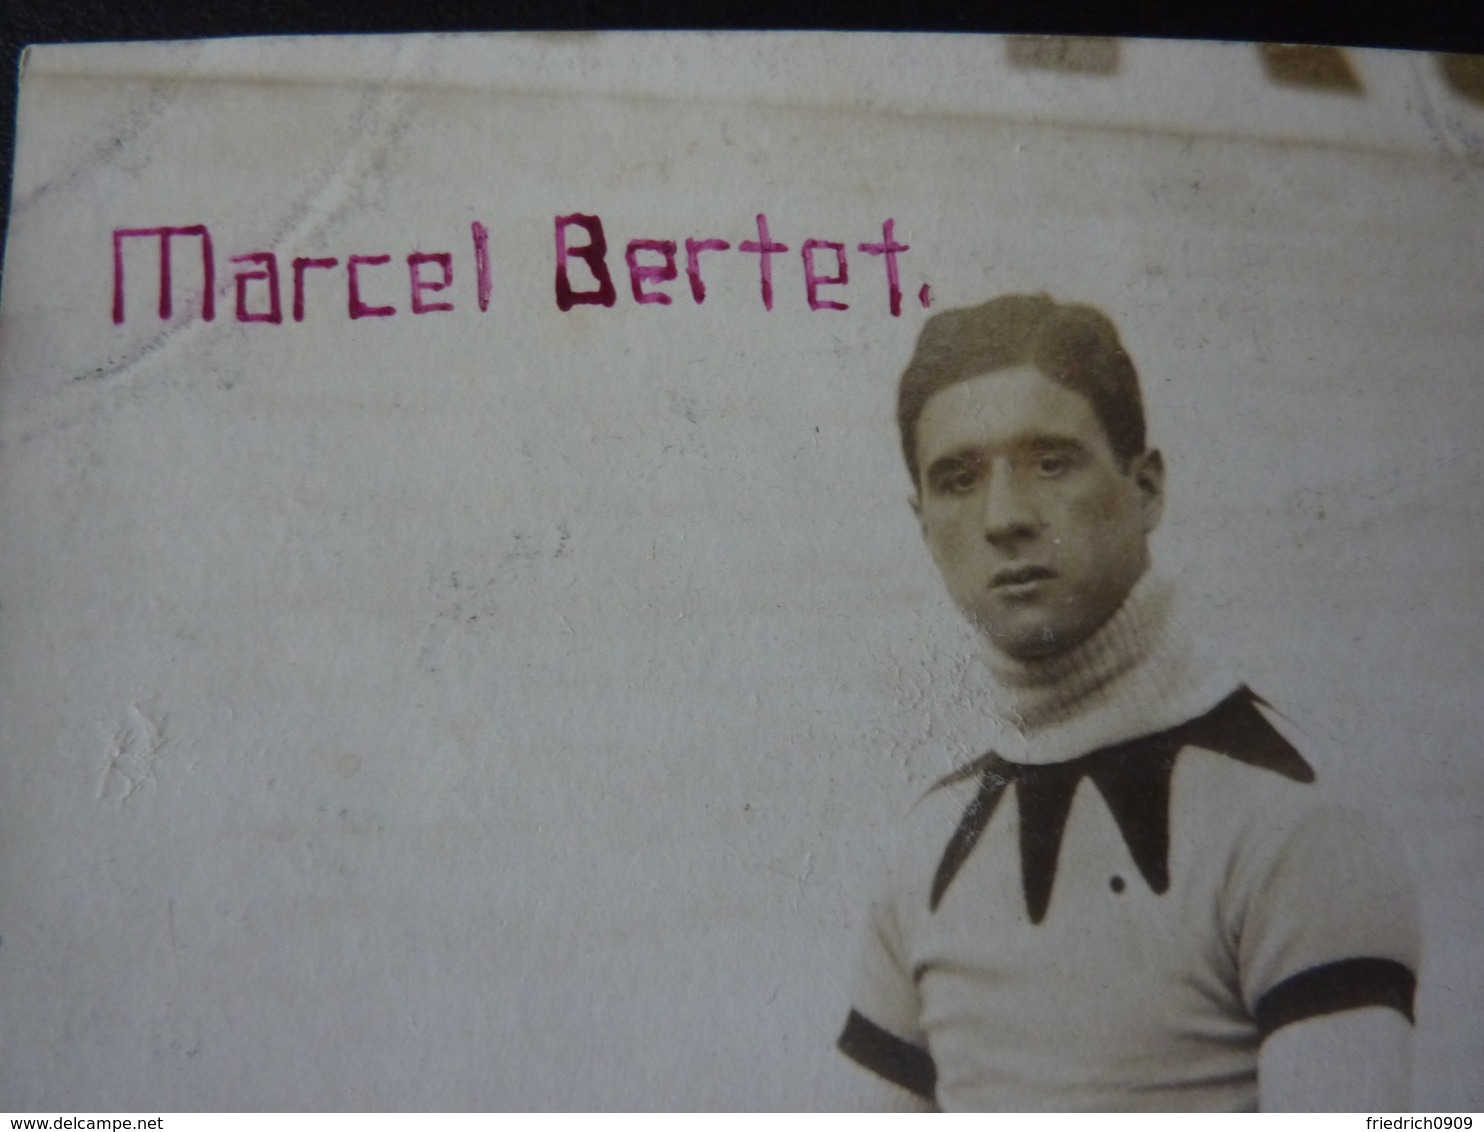 M. Berthet World Record 1907 & 1912 France Radsport Cyclisme Velo Fahrrad - Cycling